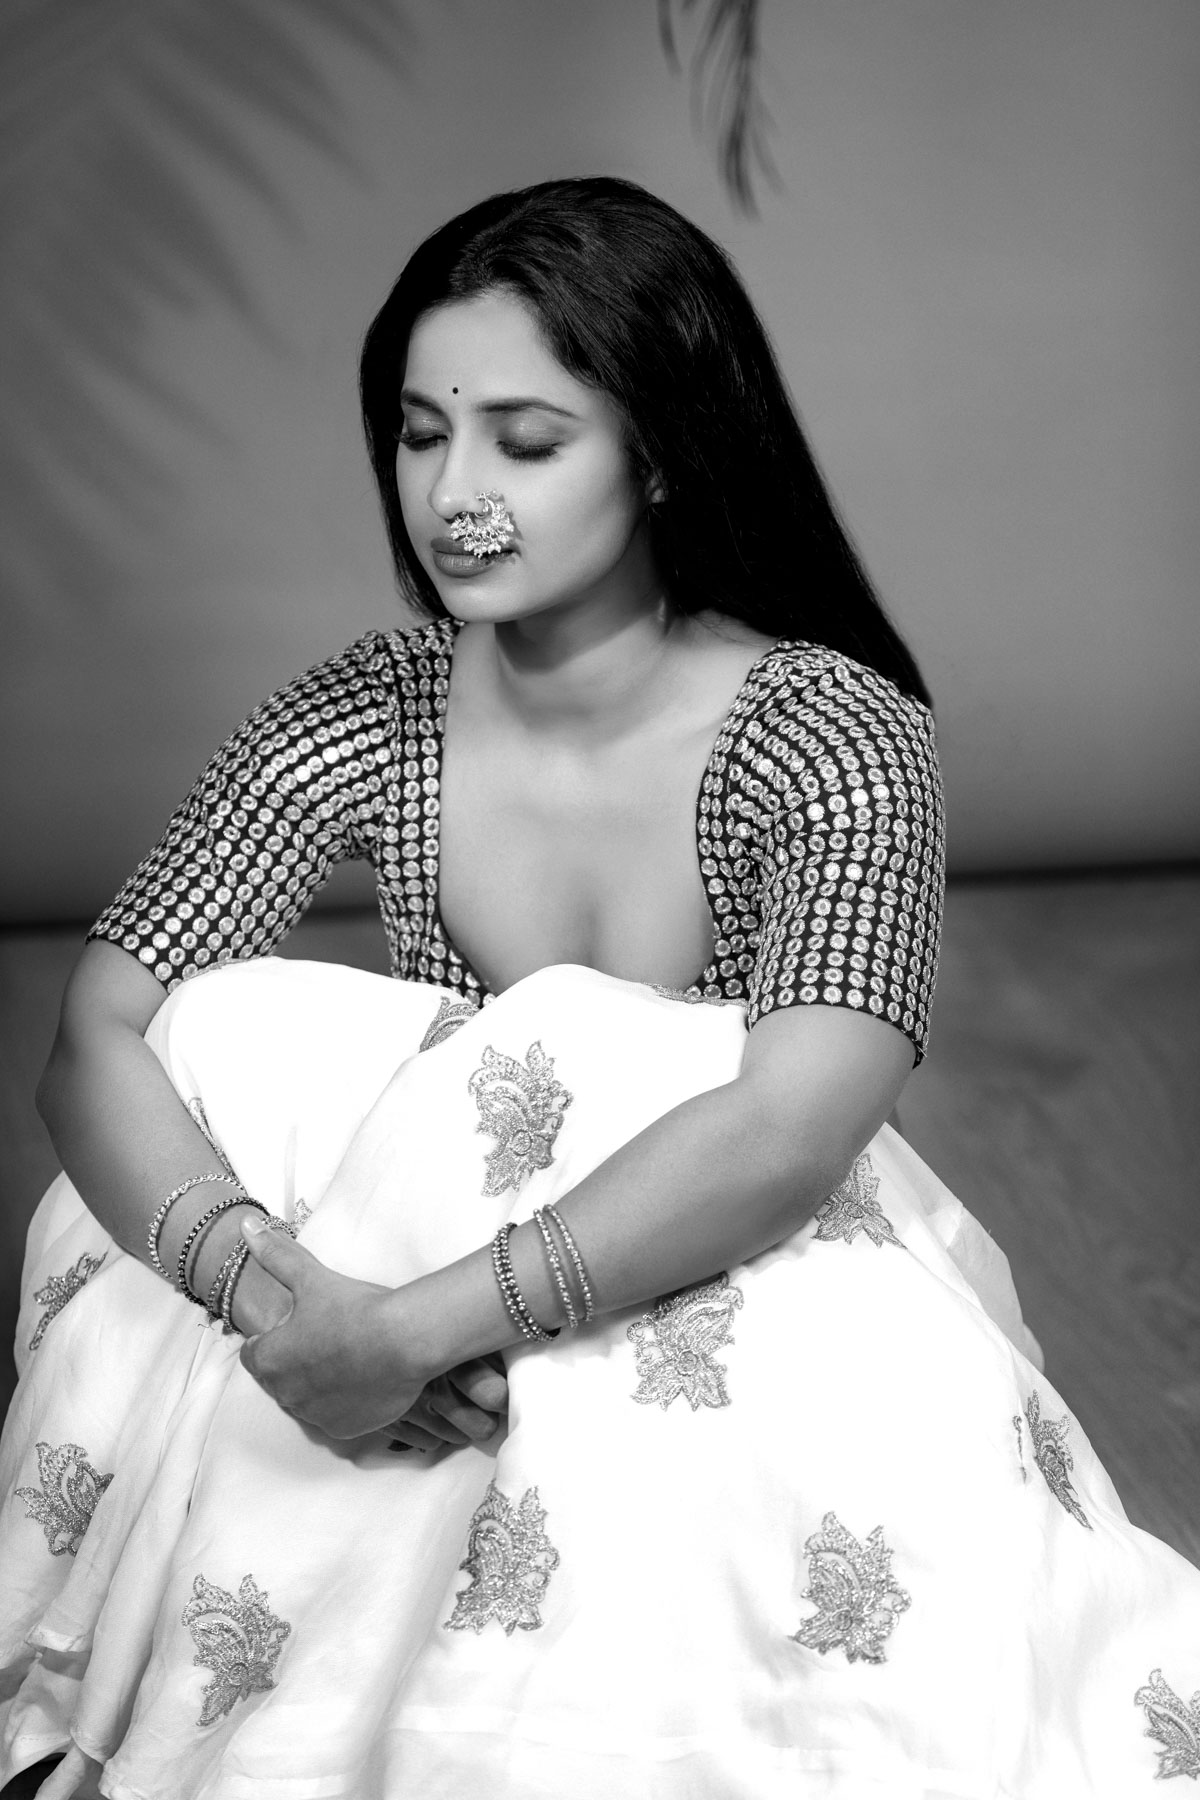 https://luckymalhotra.com/actress-ramya-krishna/